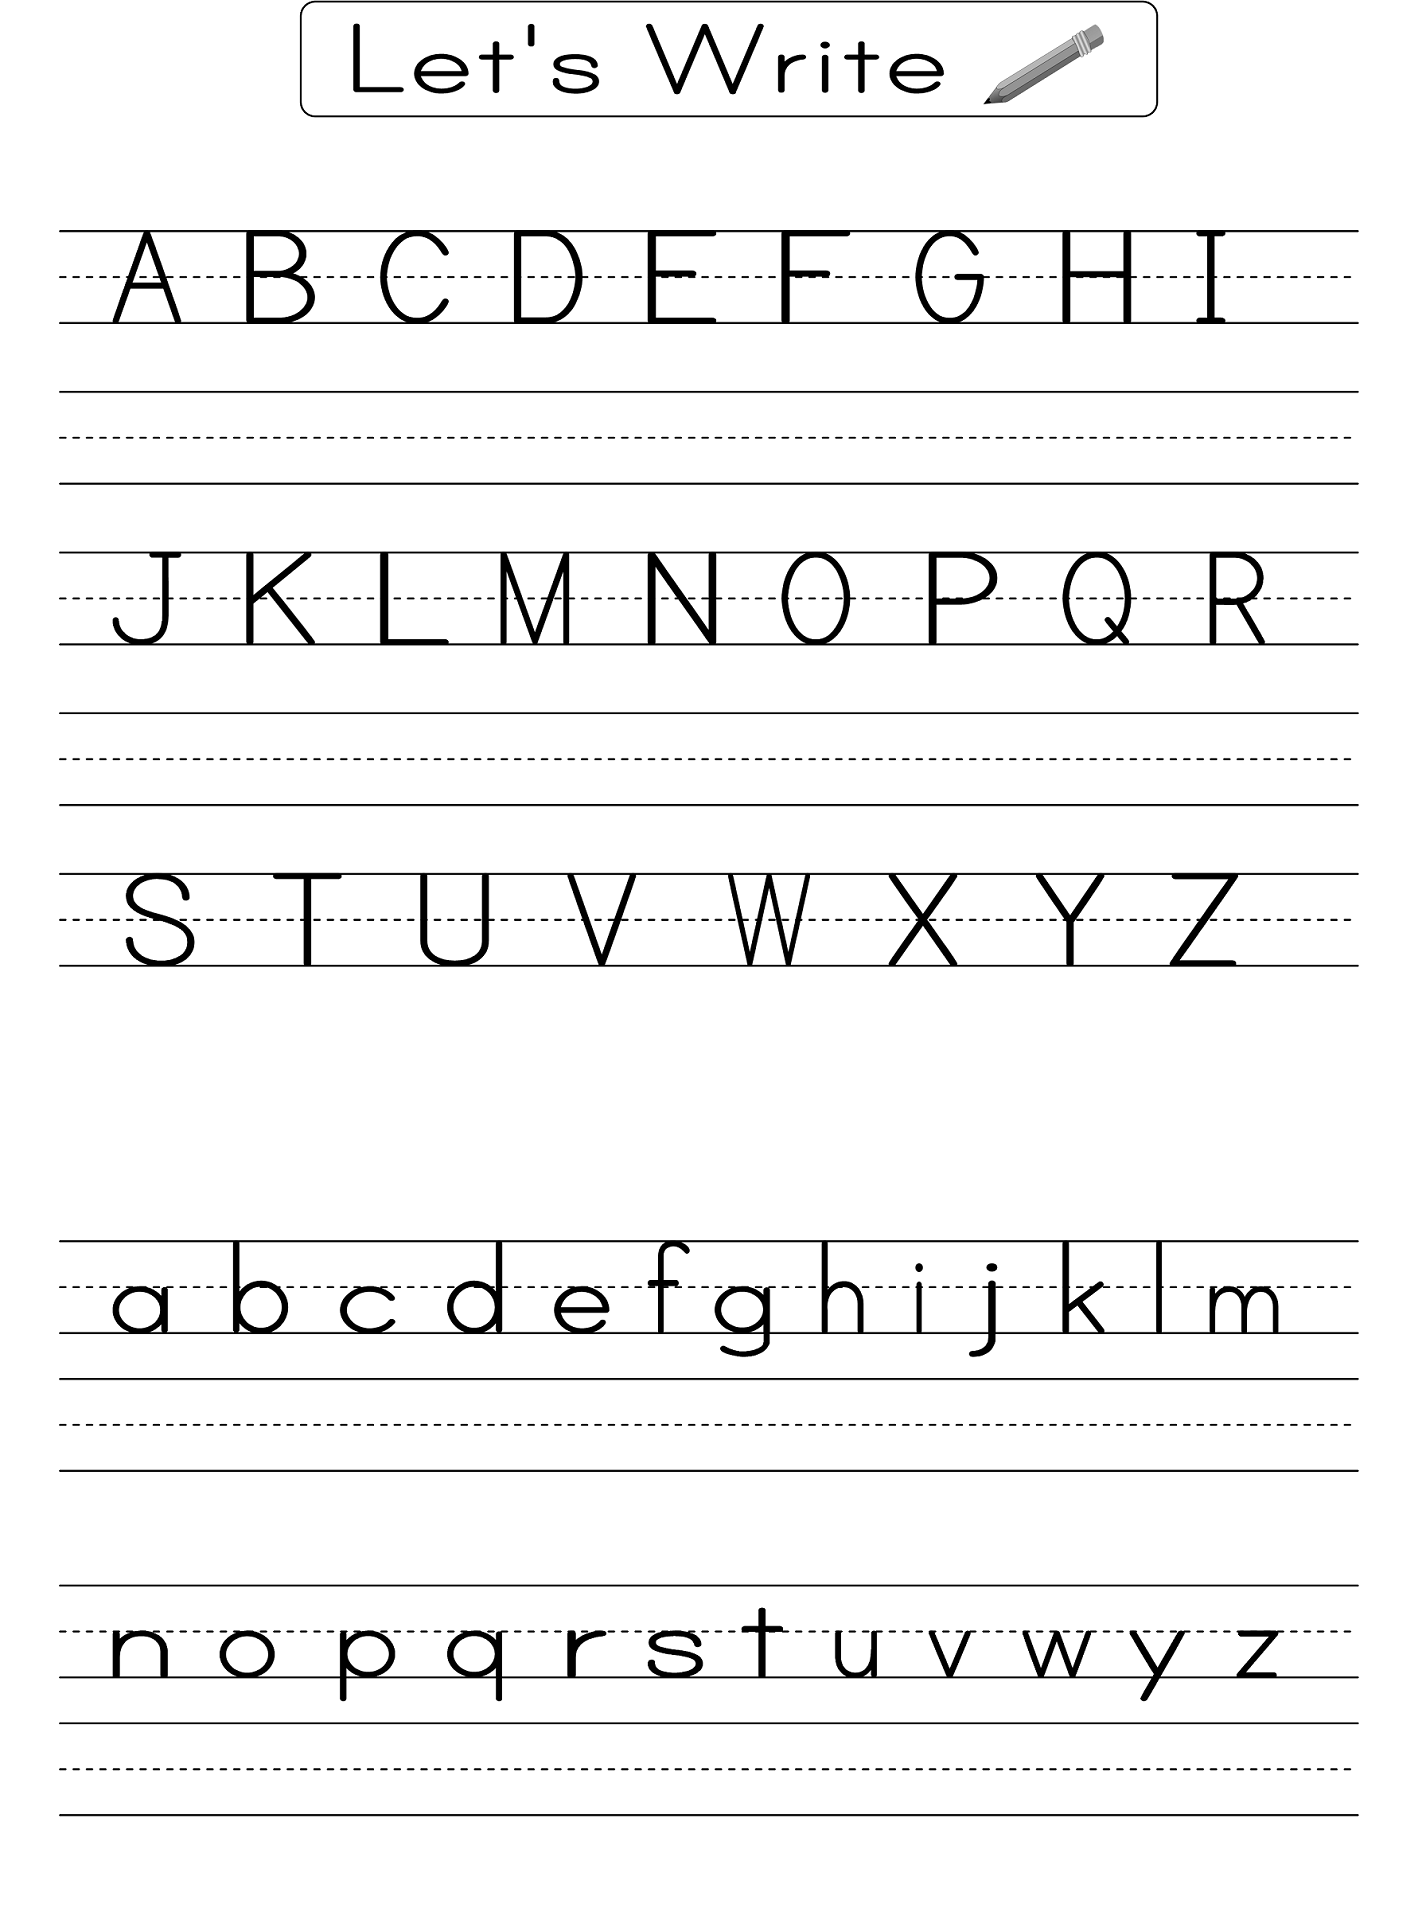 Great alphabet exercises for kindergarten - Literacy Worksheets